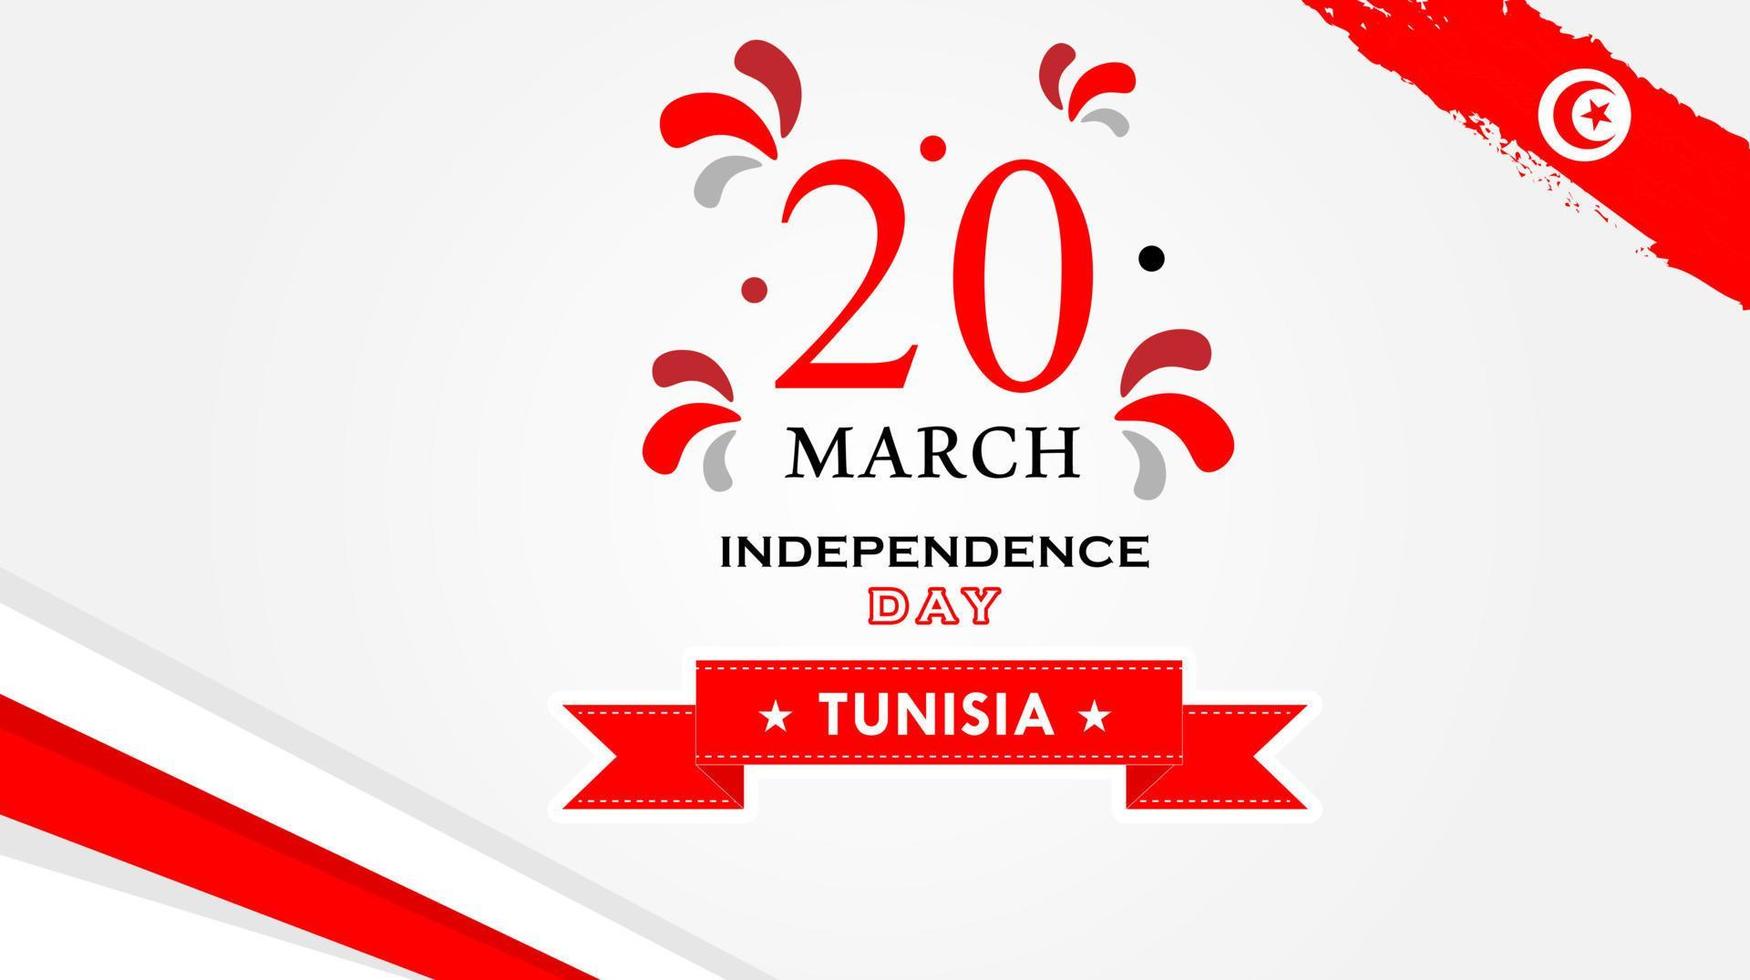 Tunisia independence day celebration background. Vector design.